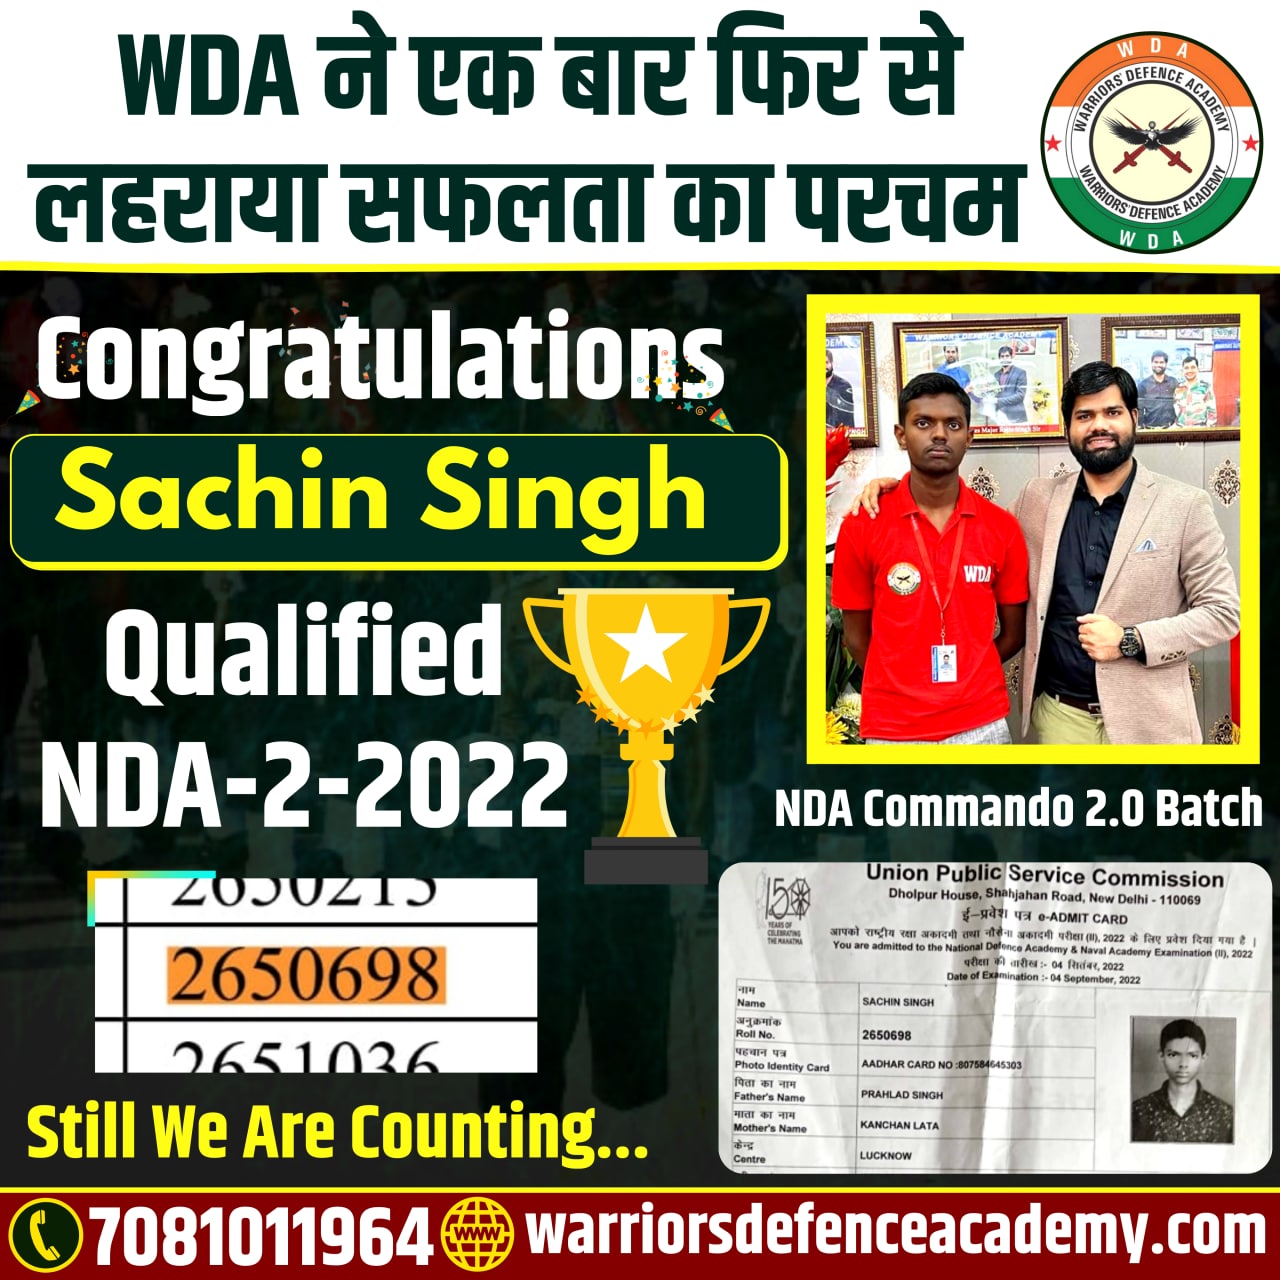 Top NDA Institute Lucknow | Best Defence Academy in Lucknow | Warriors Defence Academy